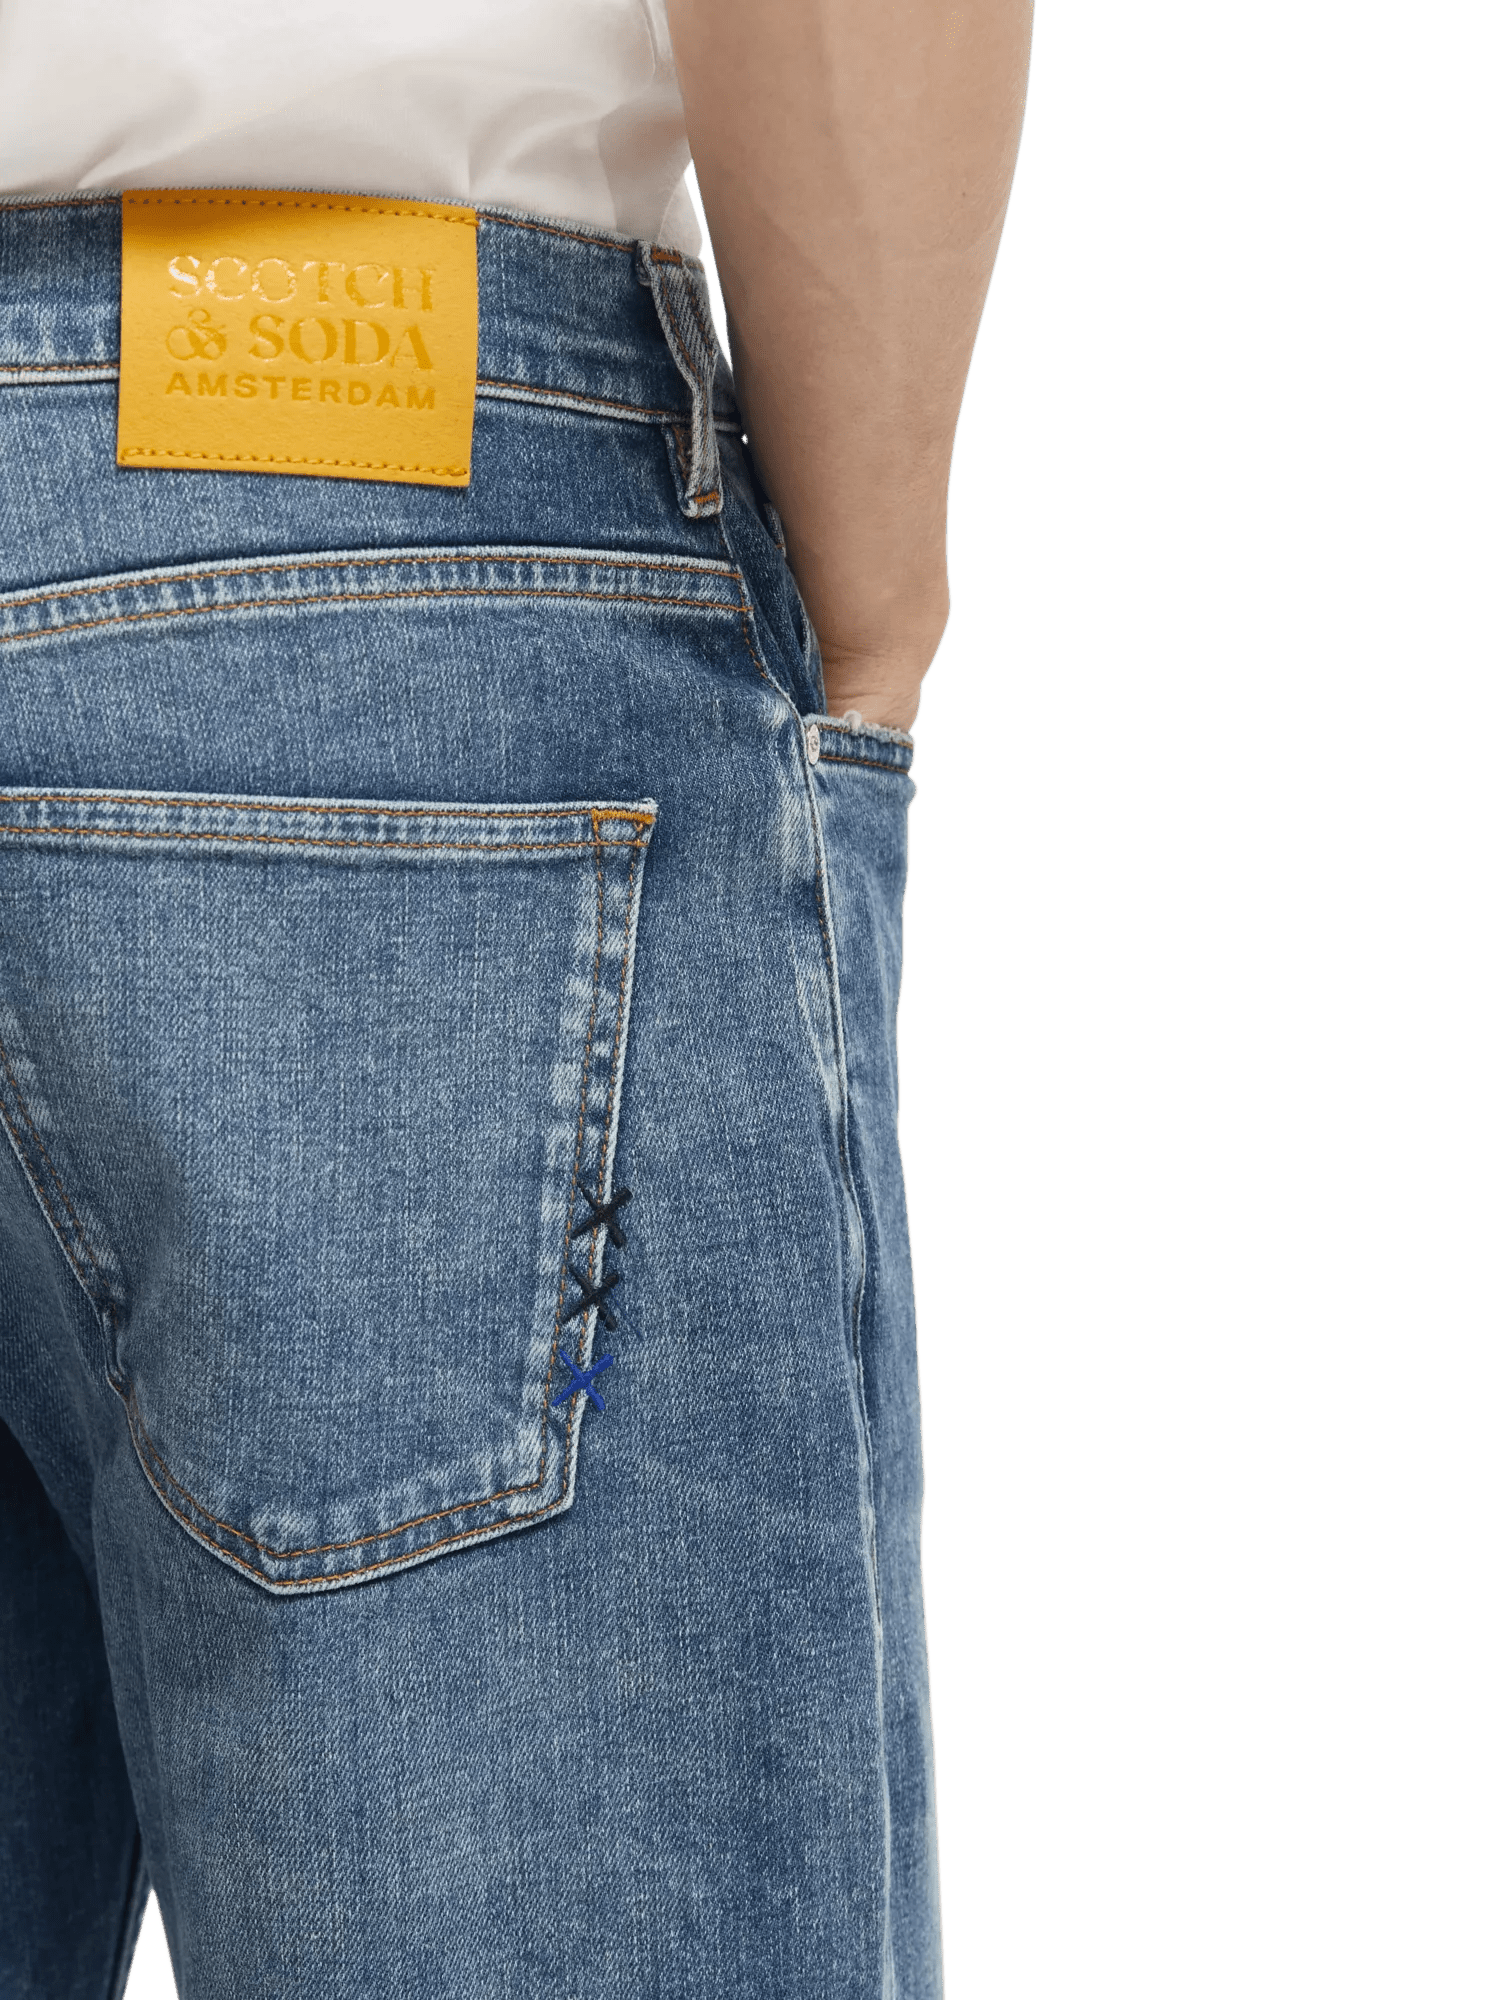 Scotch & Soda The Drop Jeans im Regular Tapered Fit aus Bio-Baumwolle NHD-DTL1